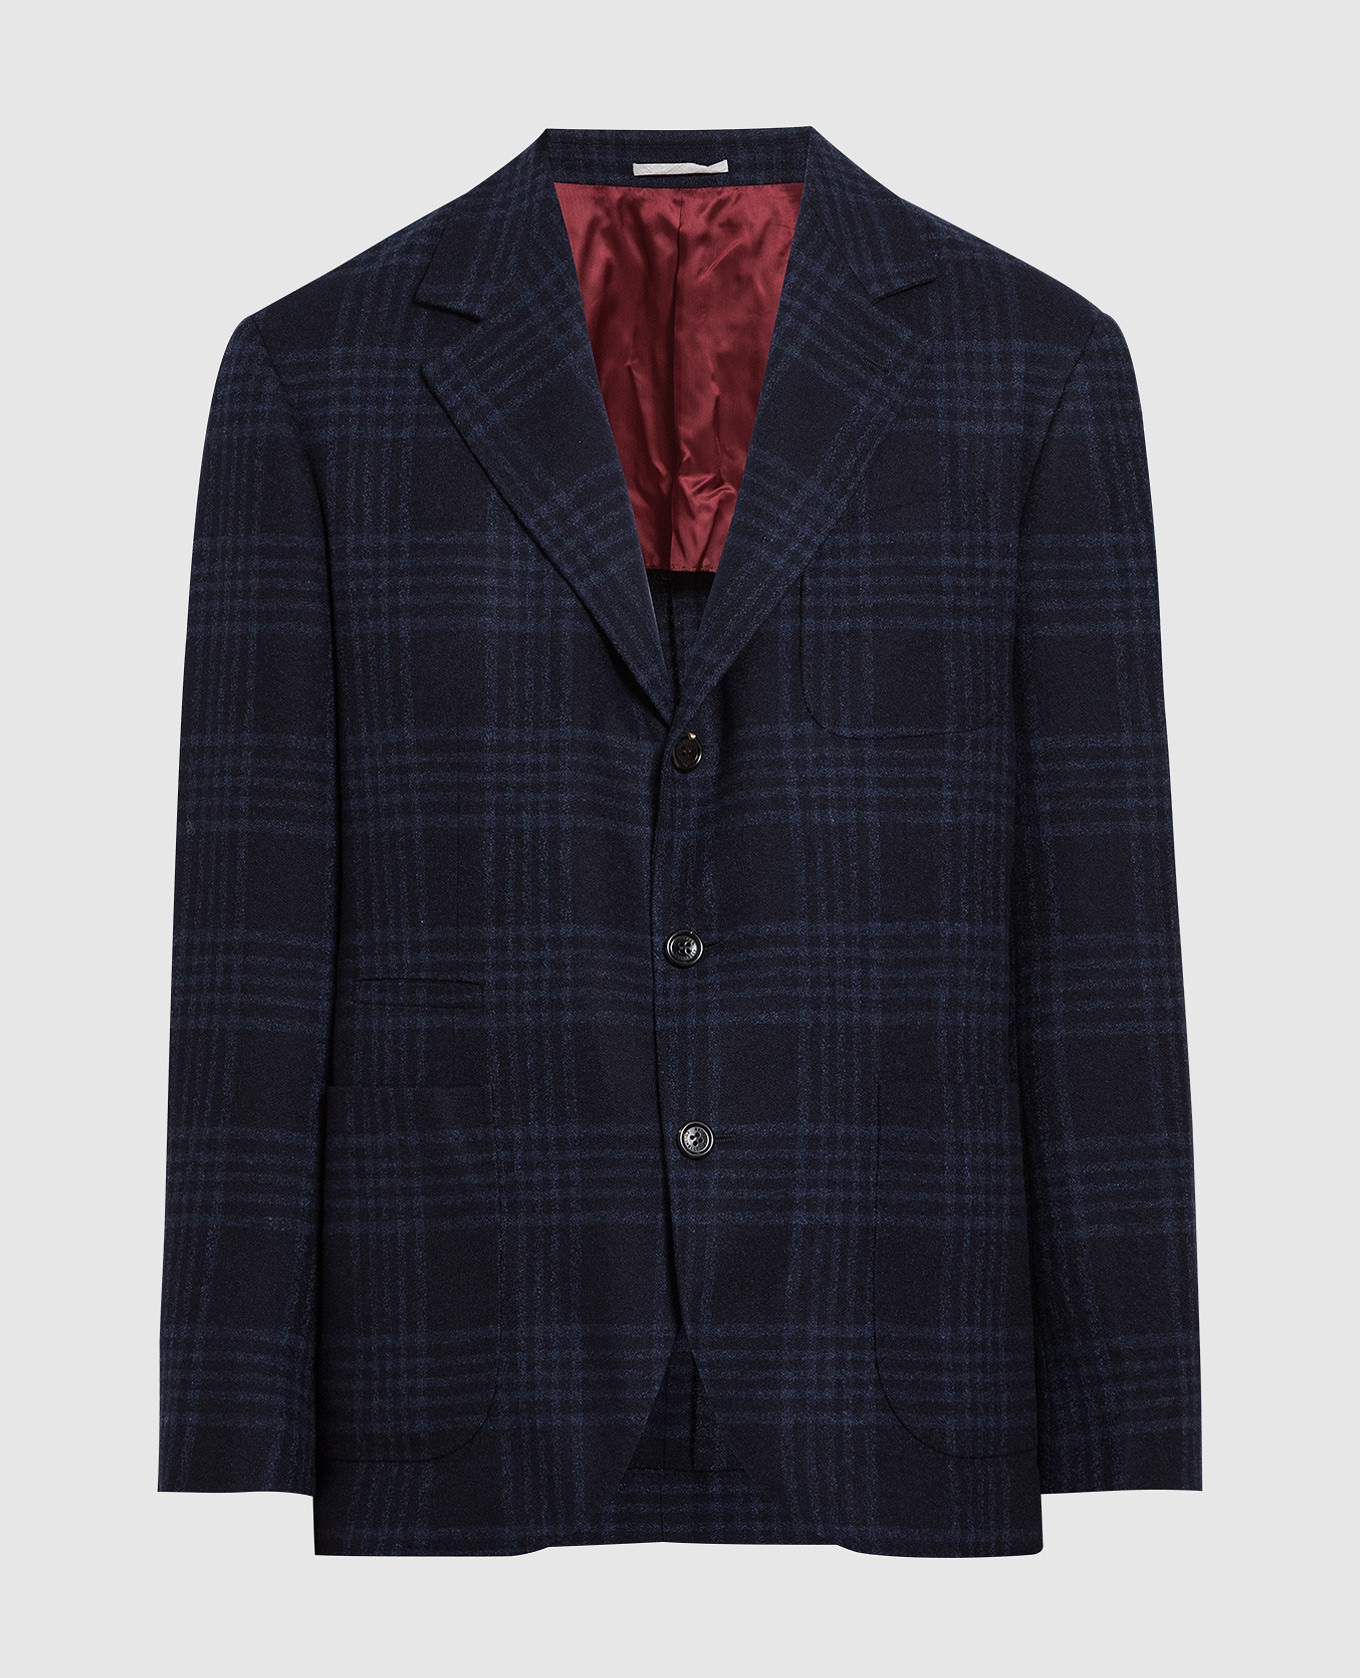 Black Windsor check wool, silk and cashmere blazer